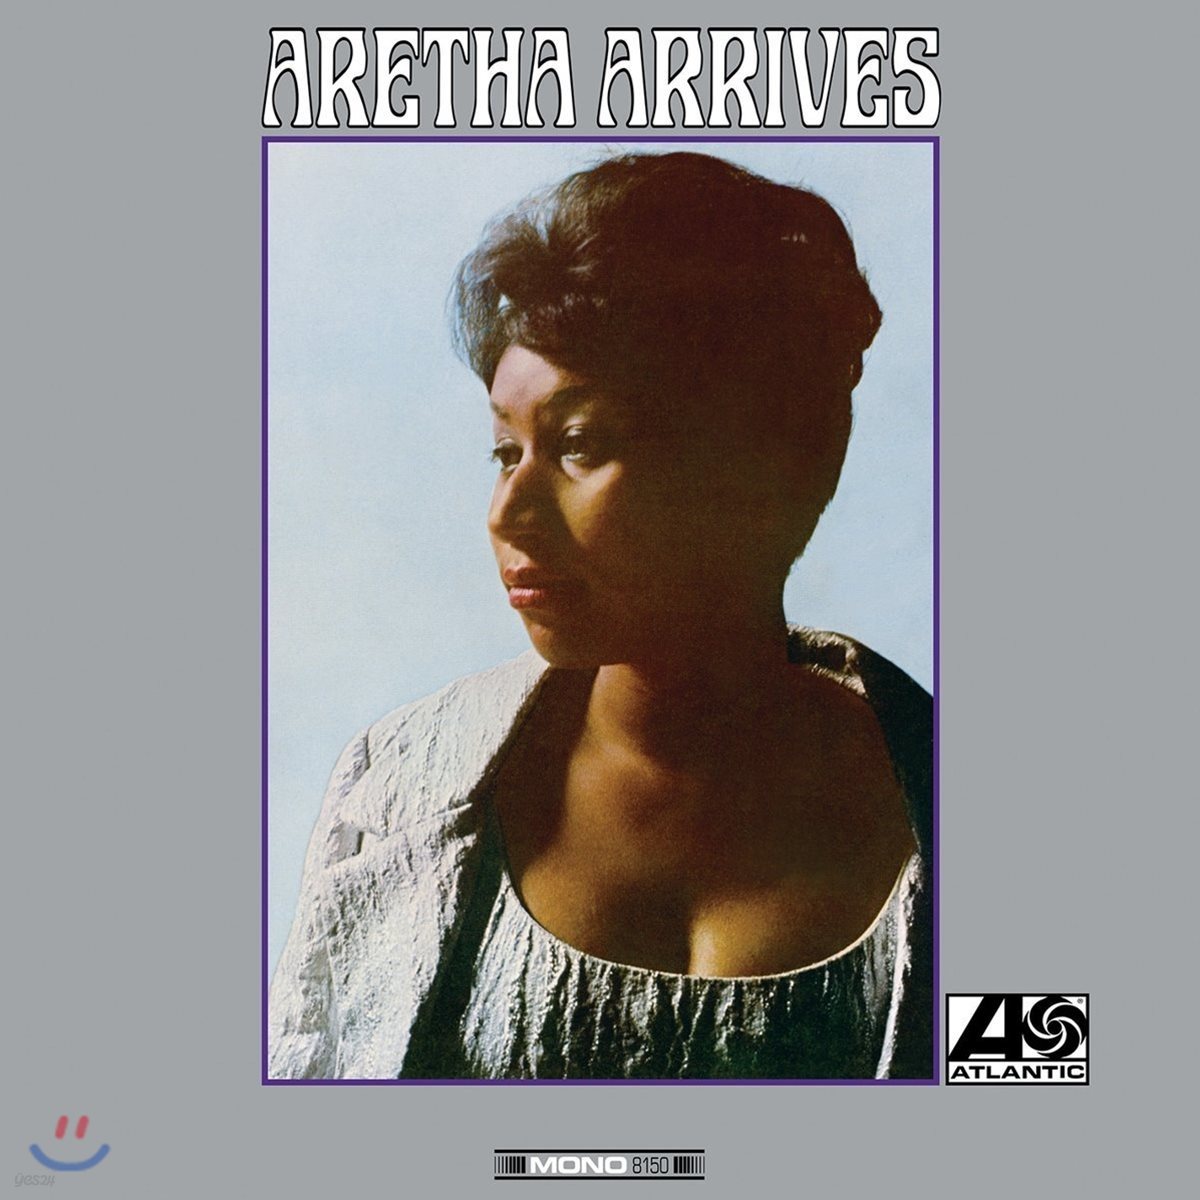 Aretha Franklin (아레사 프랭클린) - Aretha Arrives [LP]